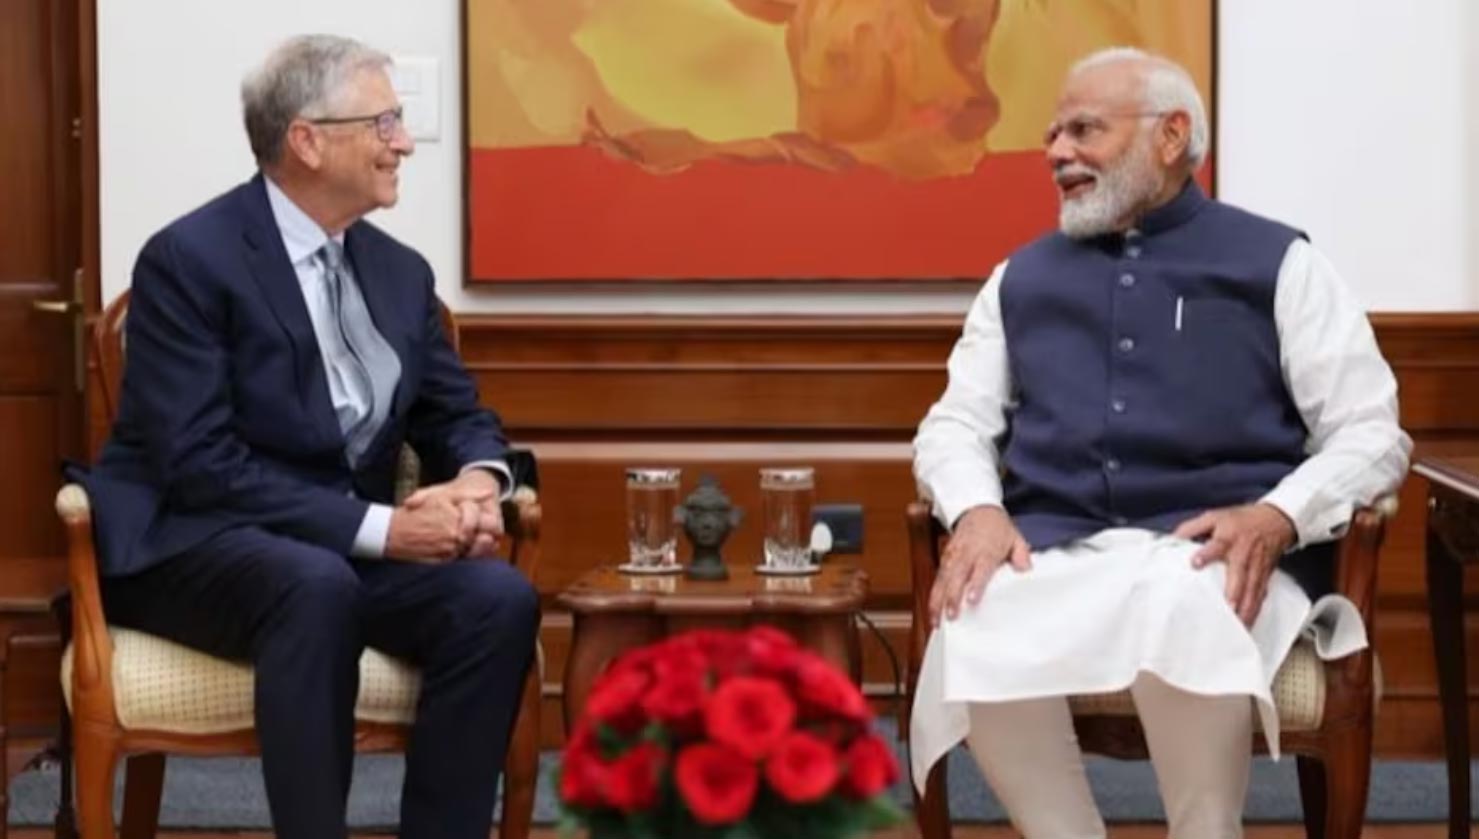 Bill Gates lauds PM Modi's vision of Digital India